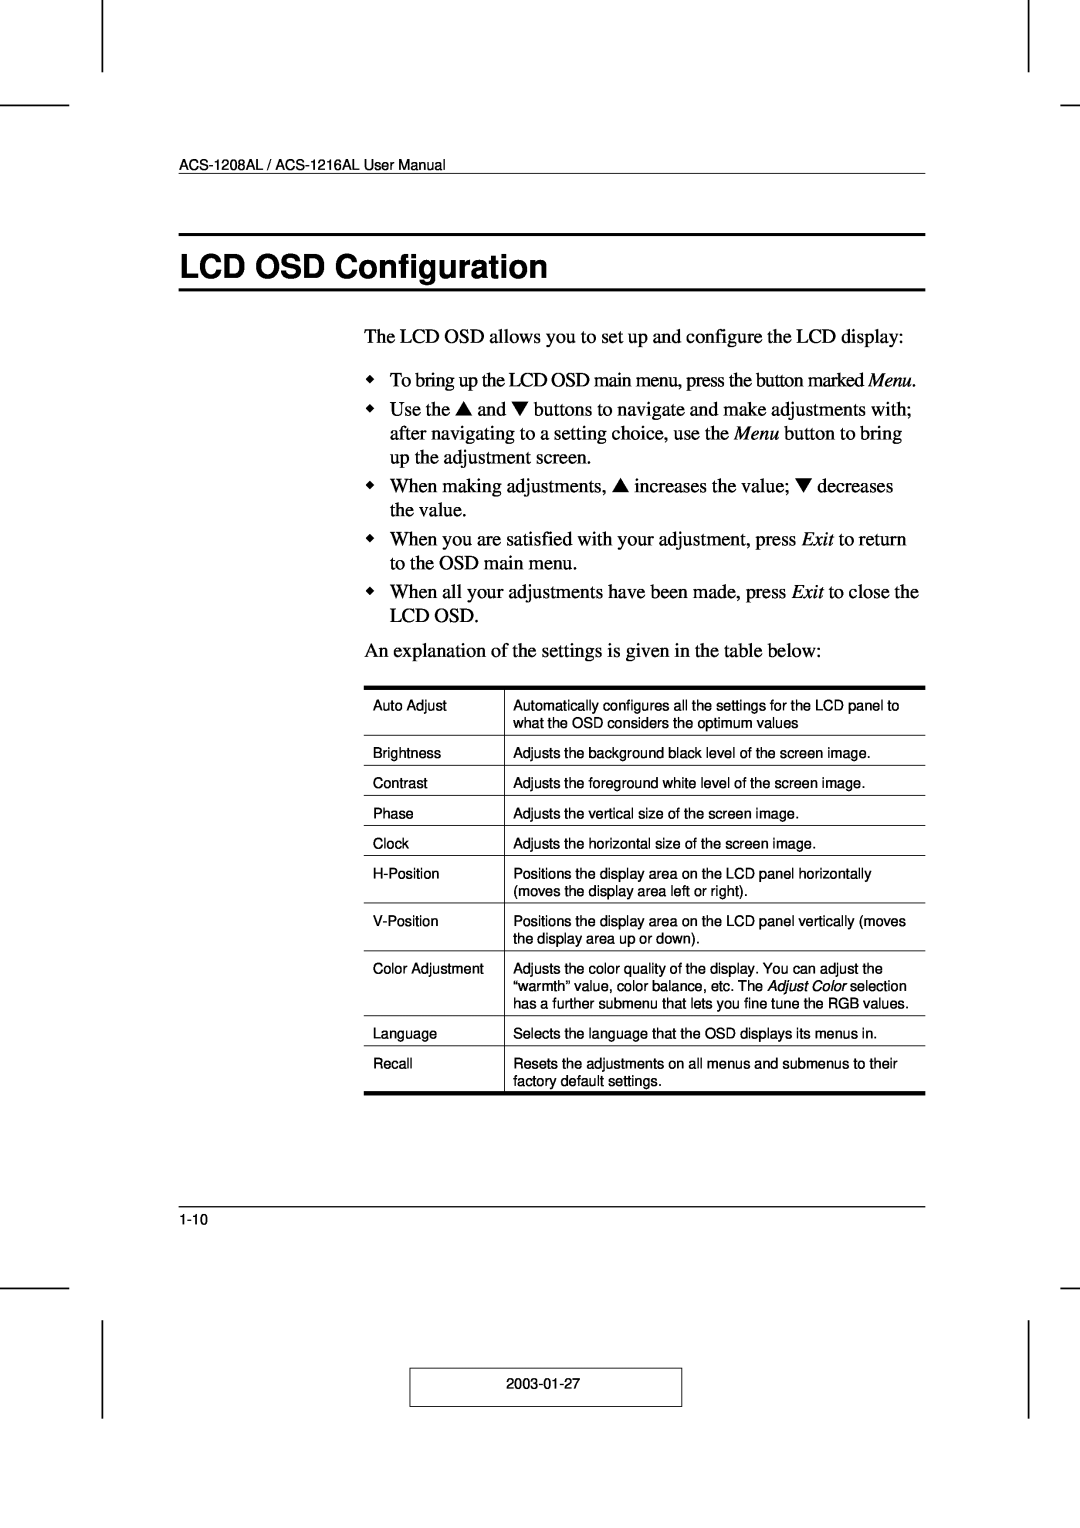 ATEN Technology ACS-1208AL, ACS-1216AL user manual LCD OSD Configuration 